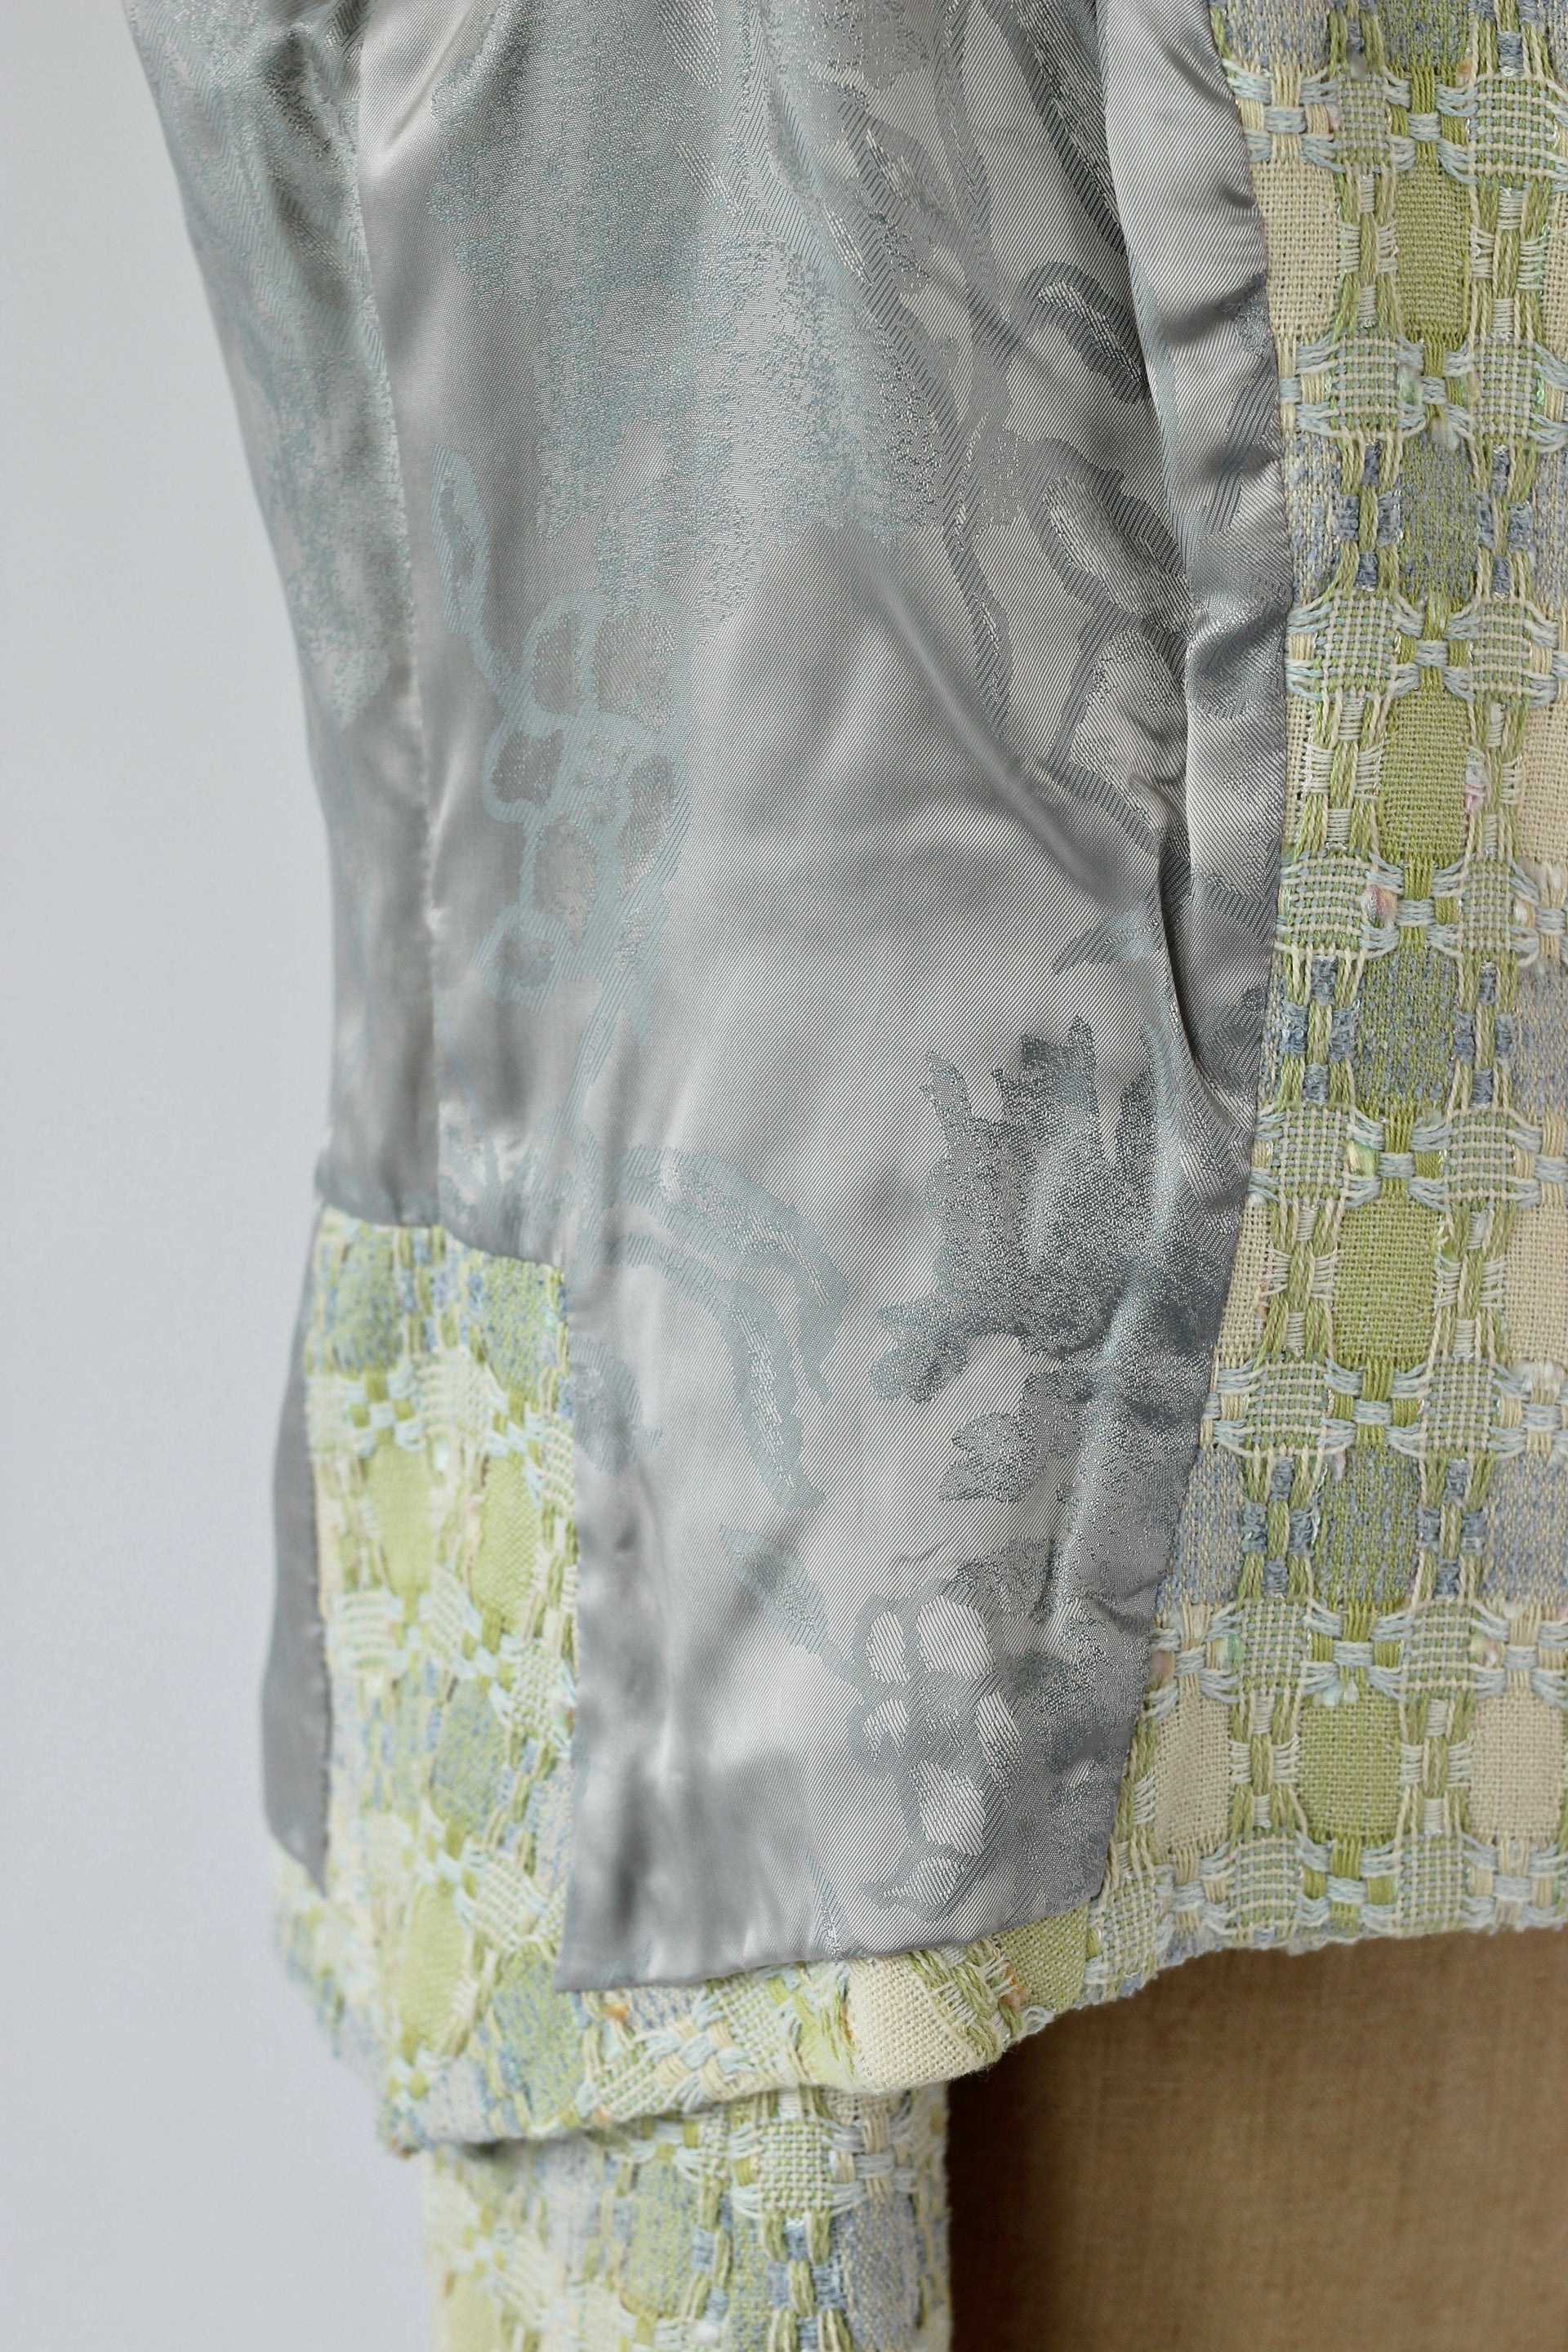 1990s Vintage Pastel Cotton Tweed Collared Blazer/Jacket//Size M